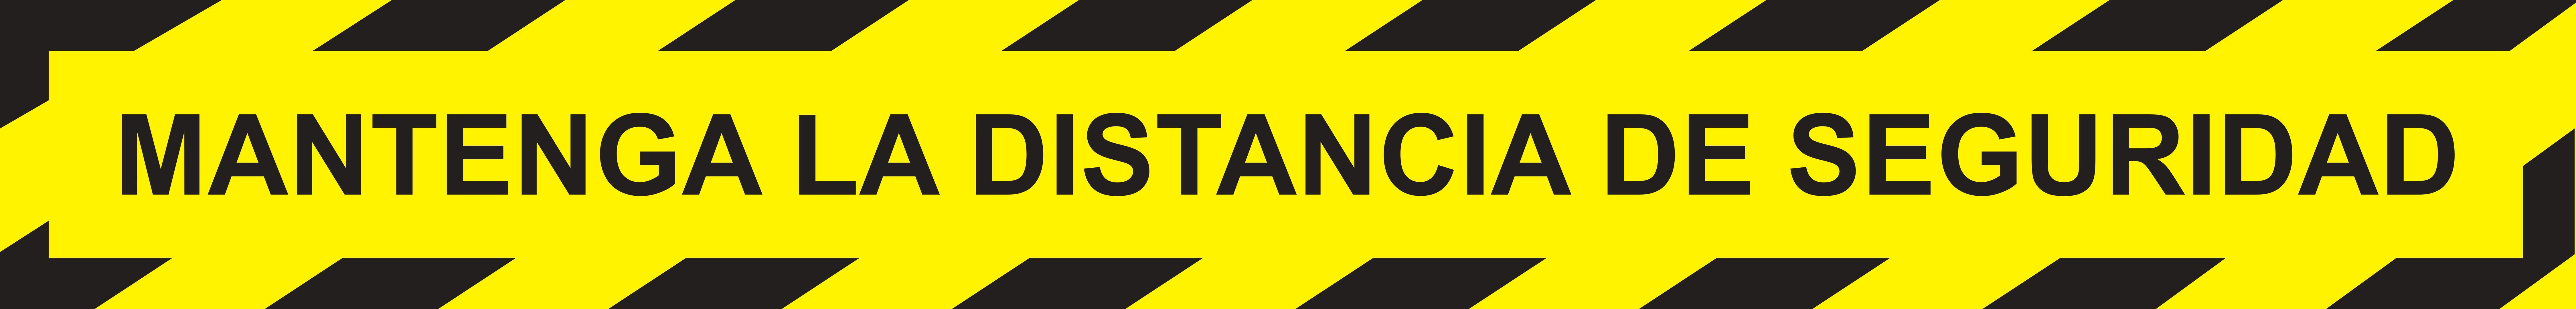 Cinta adhesiva mantenga distancia seguridad amarillo/negra